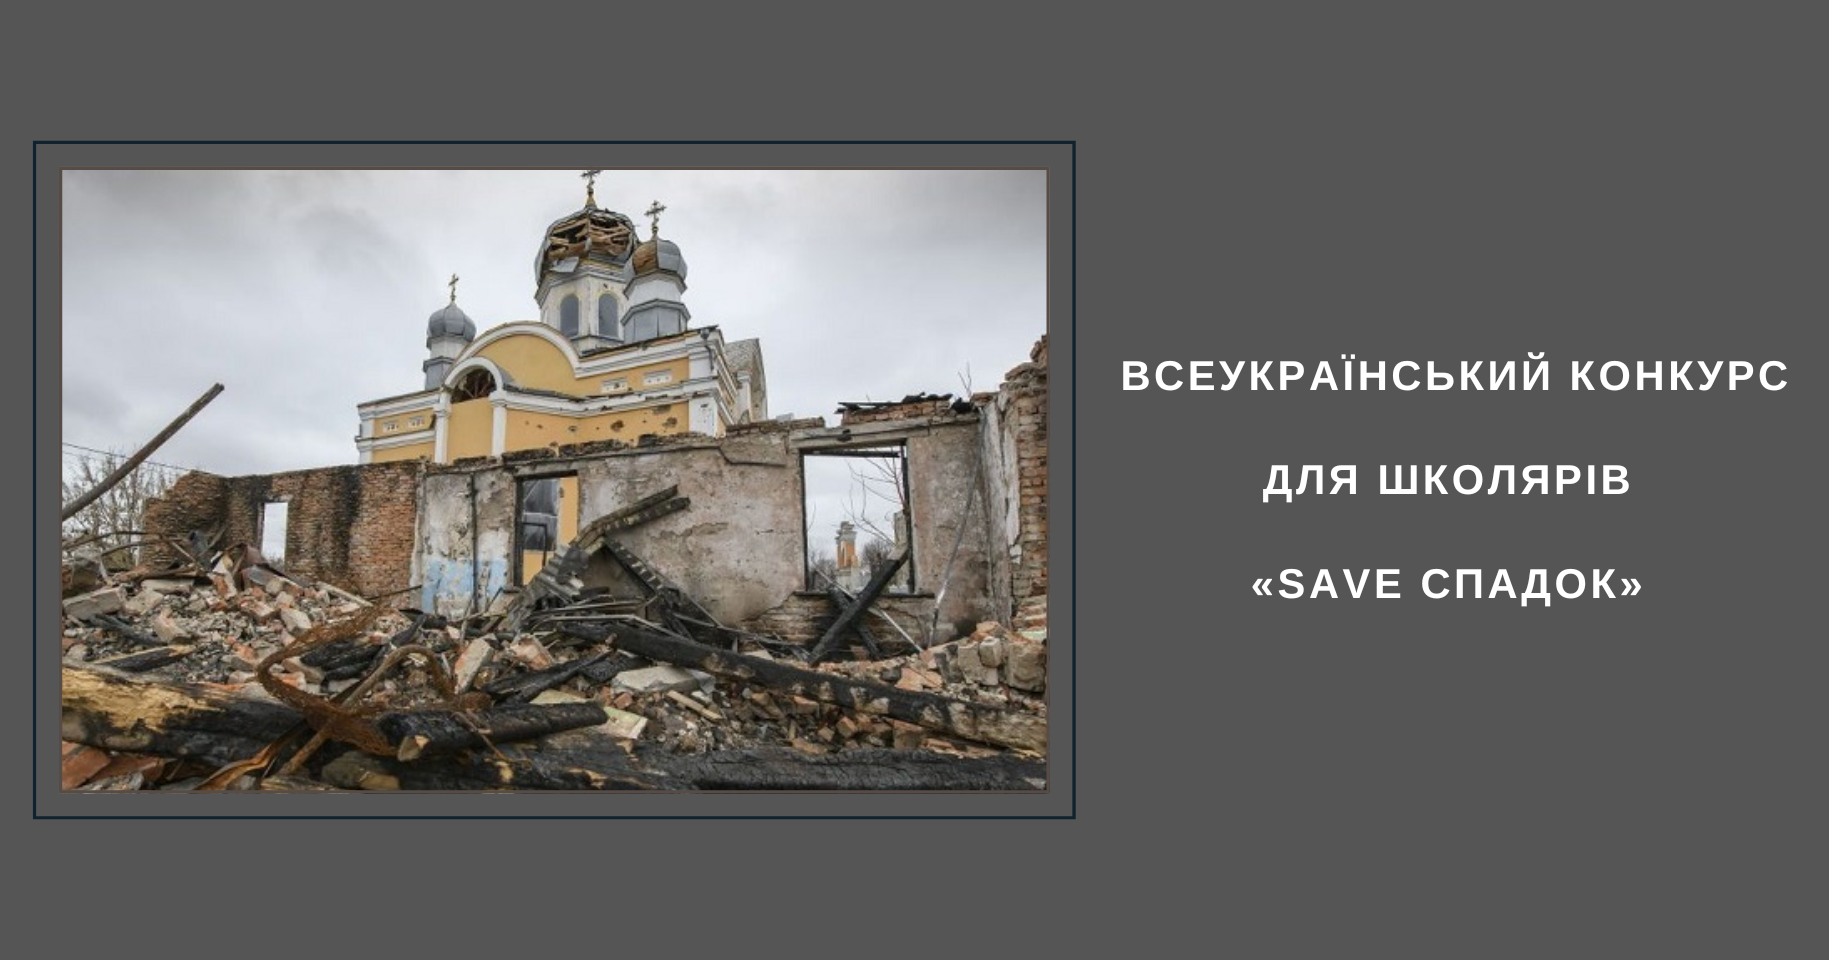 Всеукраїнський конкурс «Save Спадок»